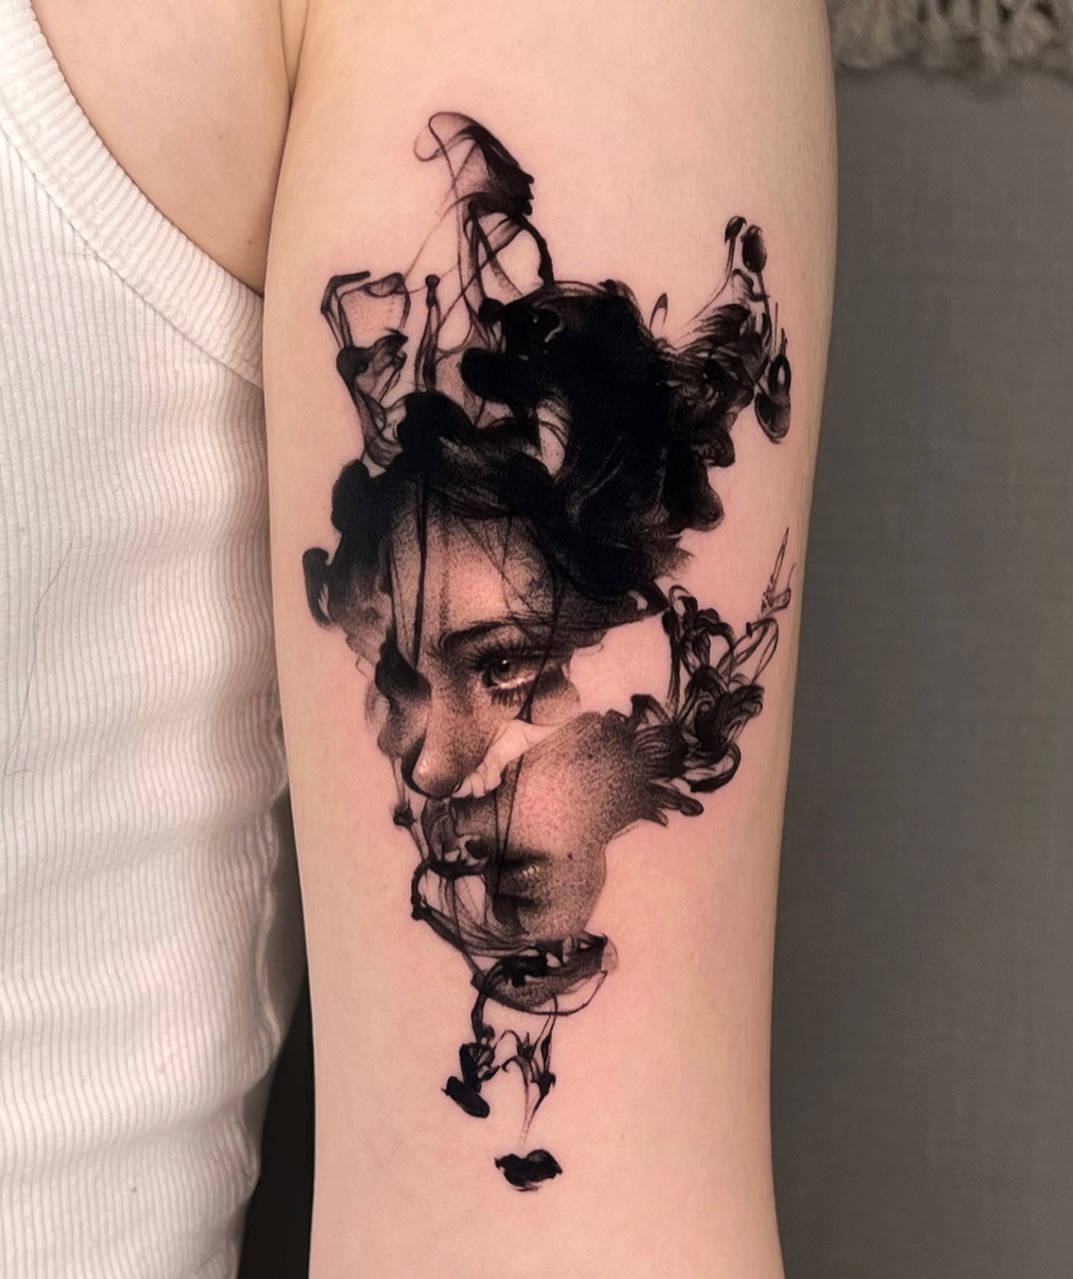 Amazing portrait tattoo by pa tat